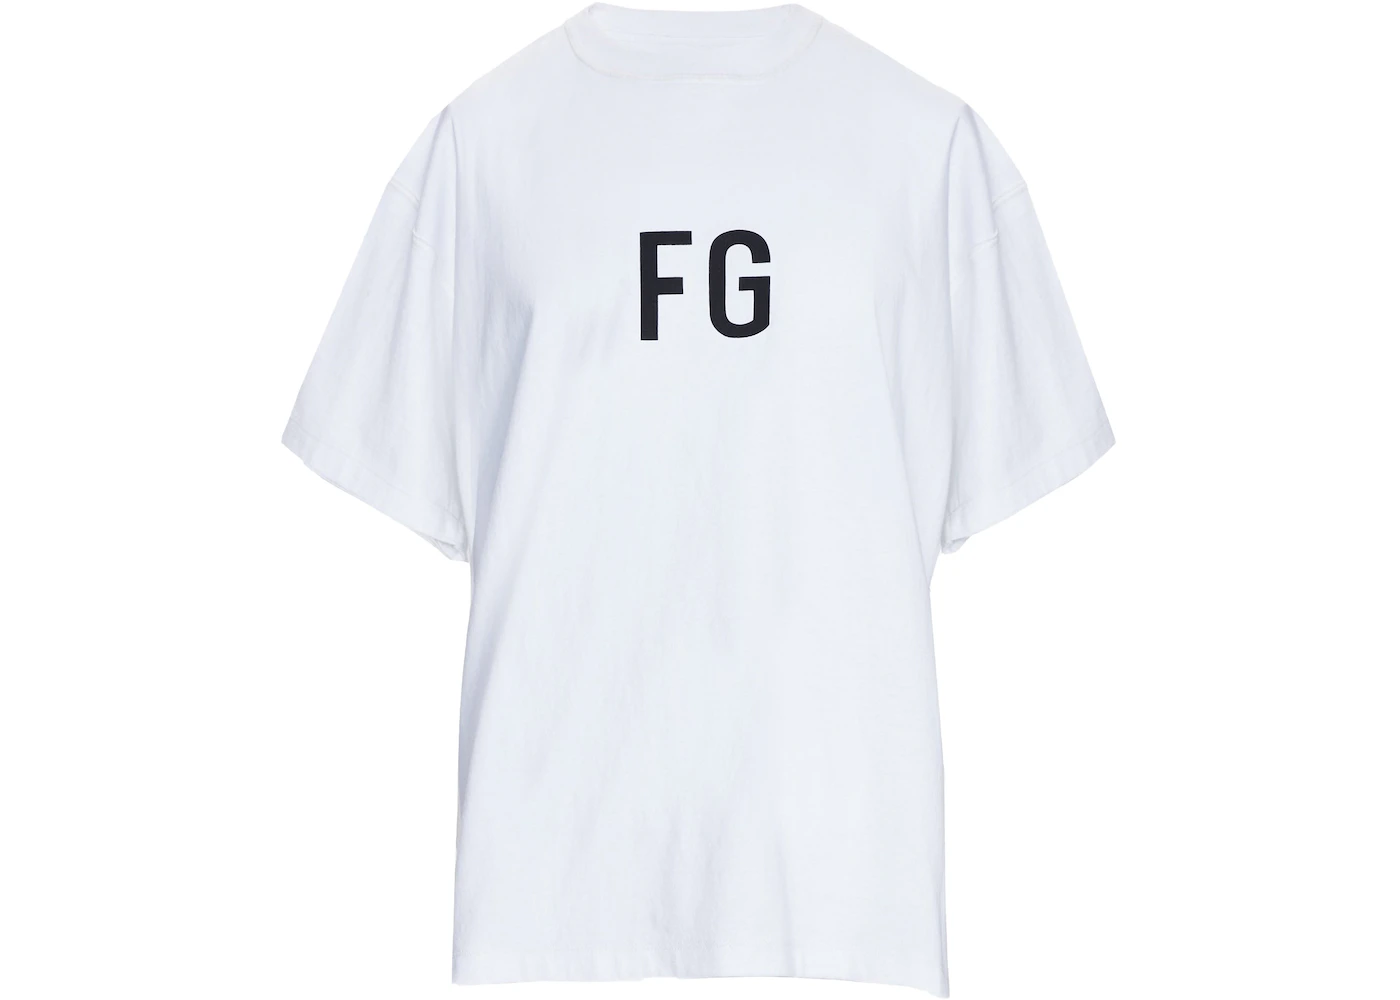 FEAR OF GOD FG' Logo T-shirt White/Black Men's - SIXTH COLLECTION - US